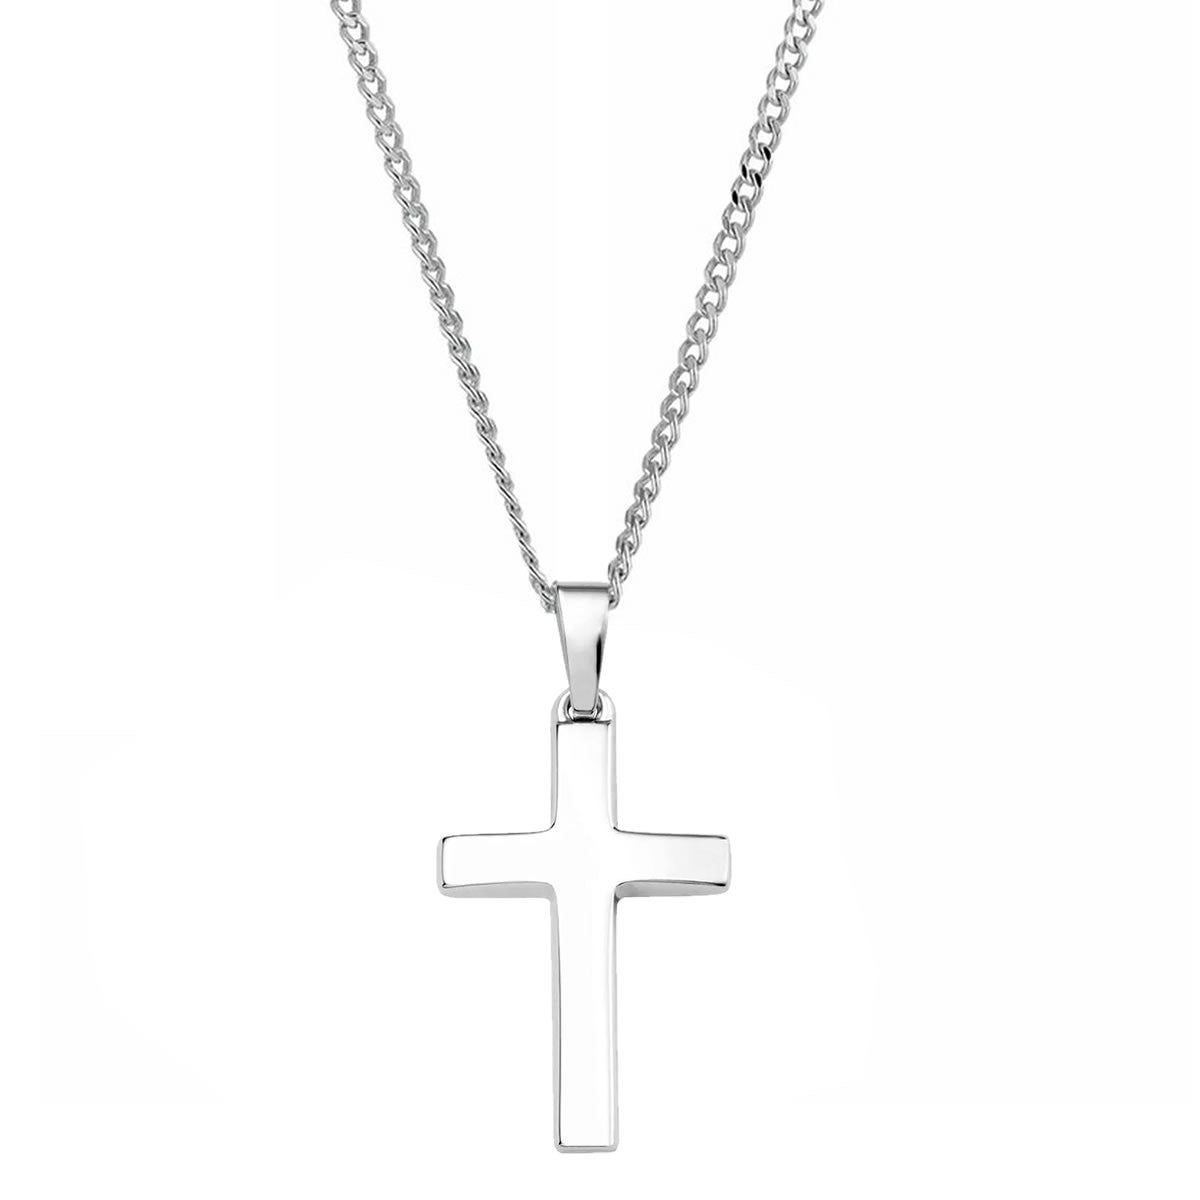 10K White Gold Cross Pendant - Polished Plain Crucifix Necklace Charm Men  Women | eBay